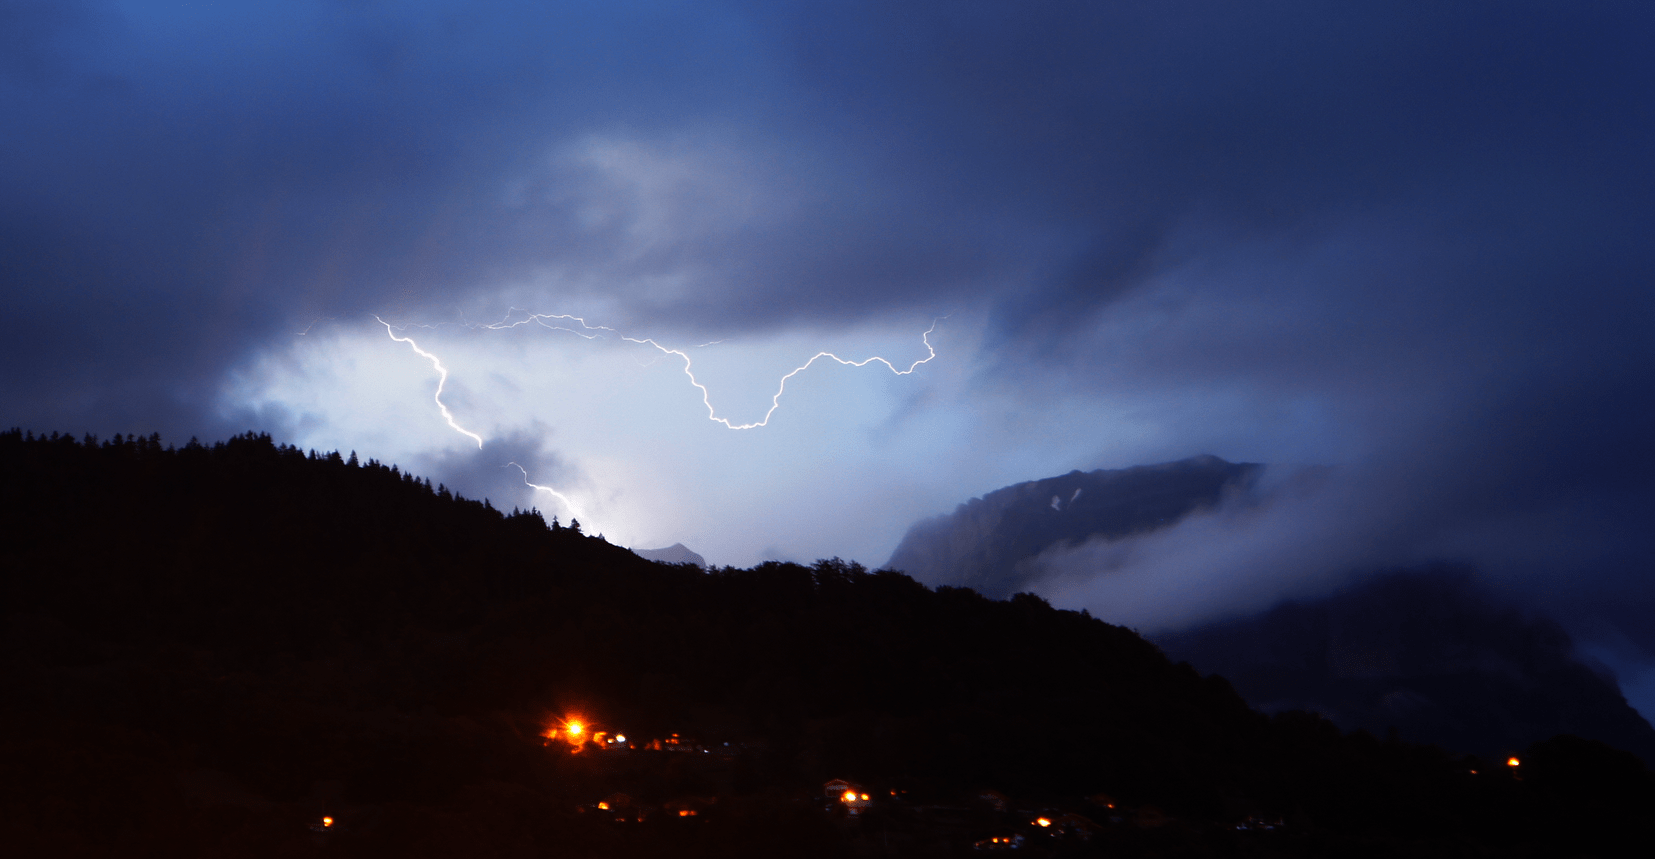 Petit orage survenu lundi soir sur le massif des Aravis (Haute-Savoie) - 11/06/2018 22:05 - Yassine Arbaji